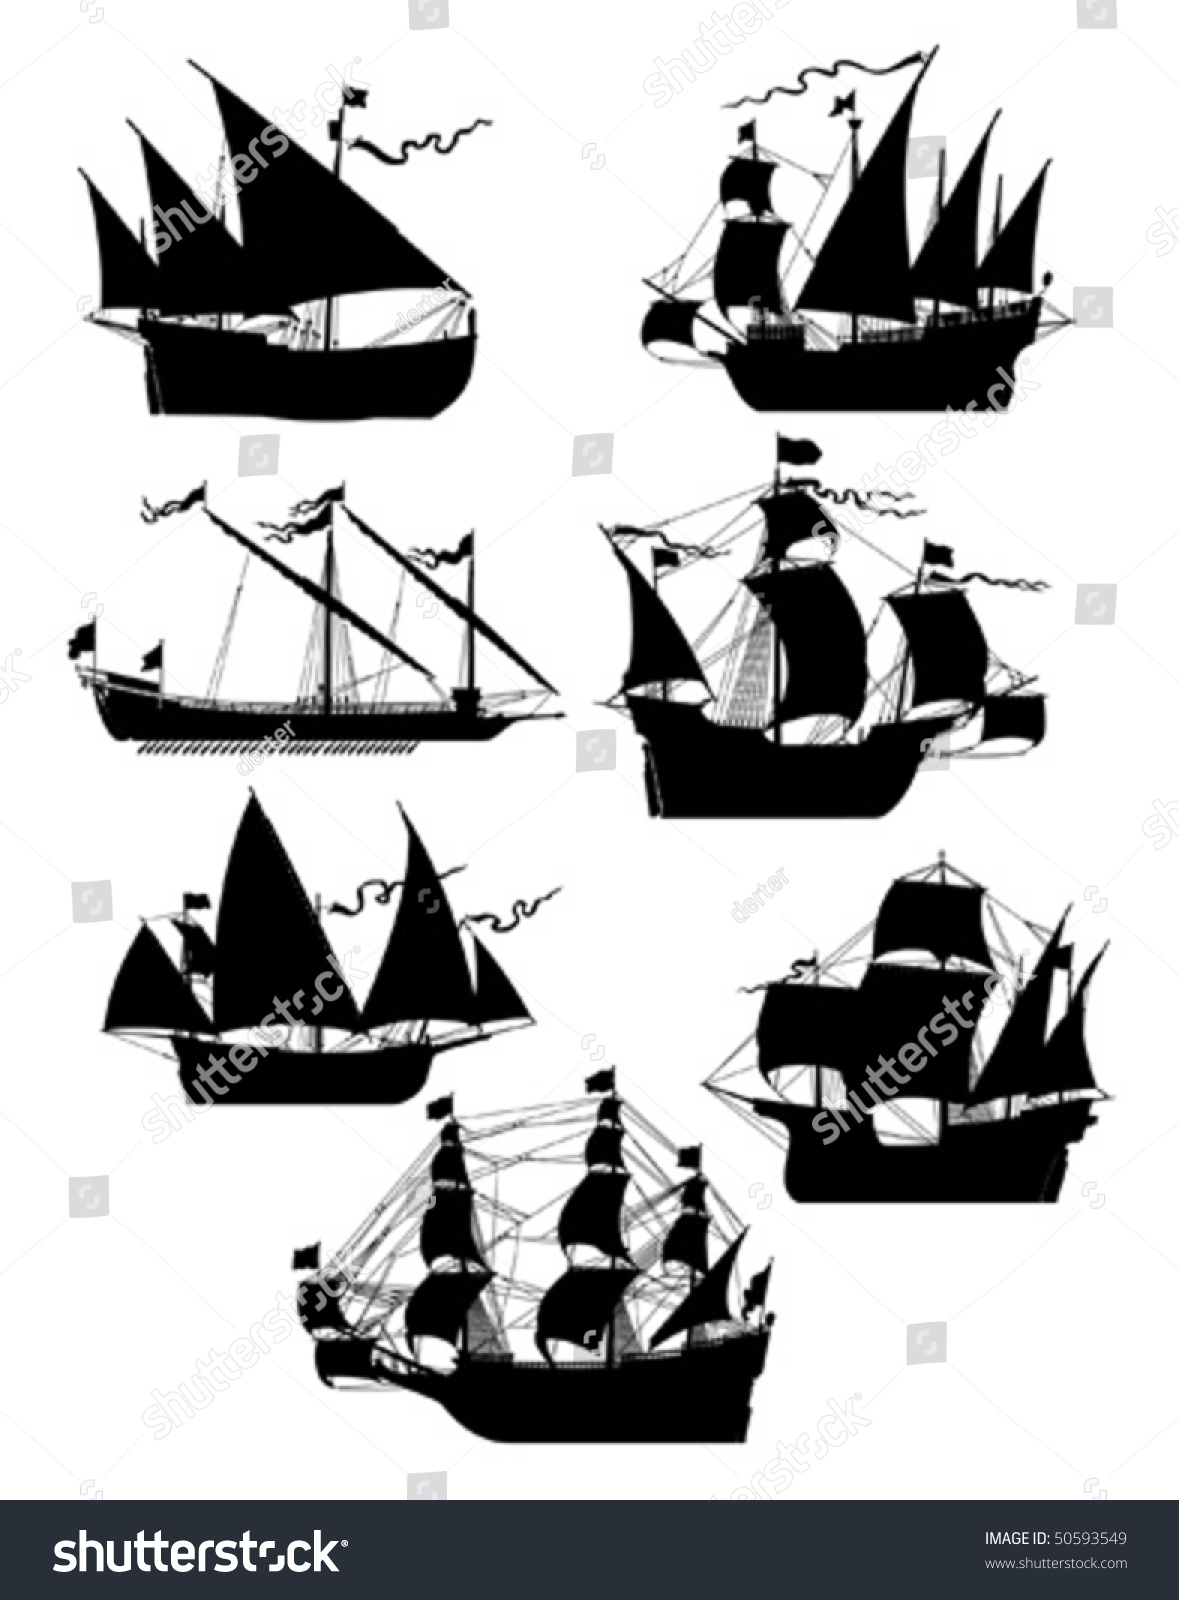 Set Of Old Sailing Ships Stock Vector Illustration 50593549 : Shutterstock